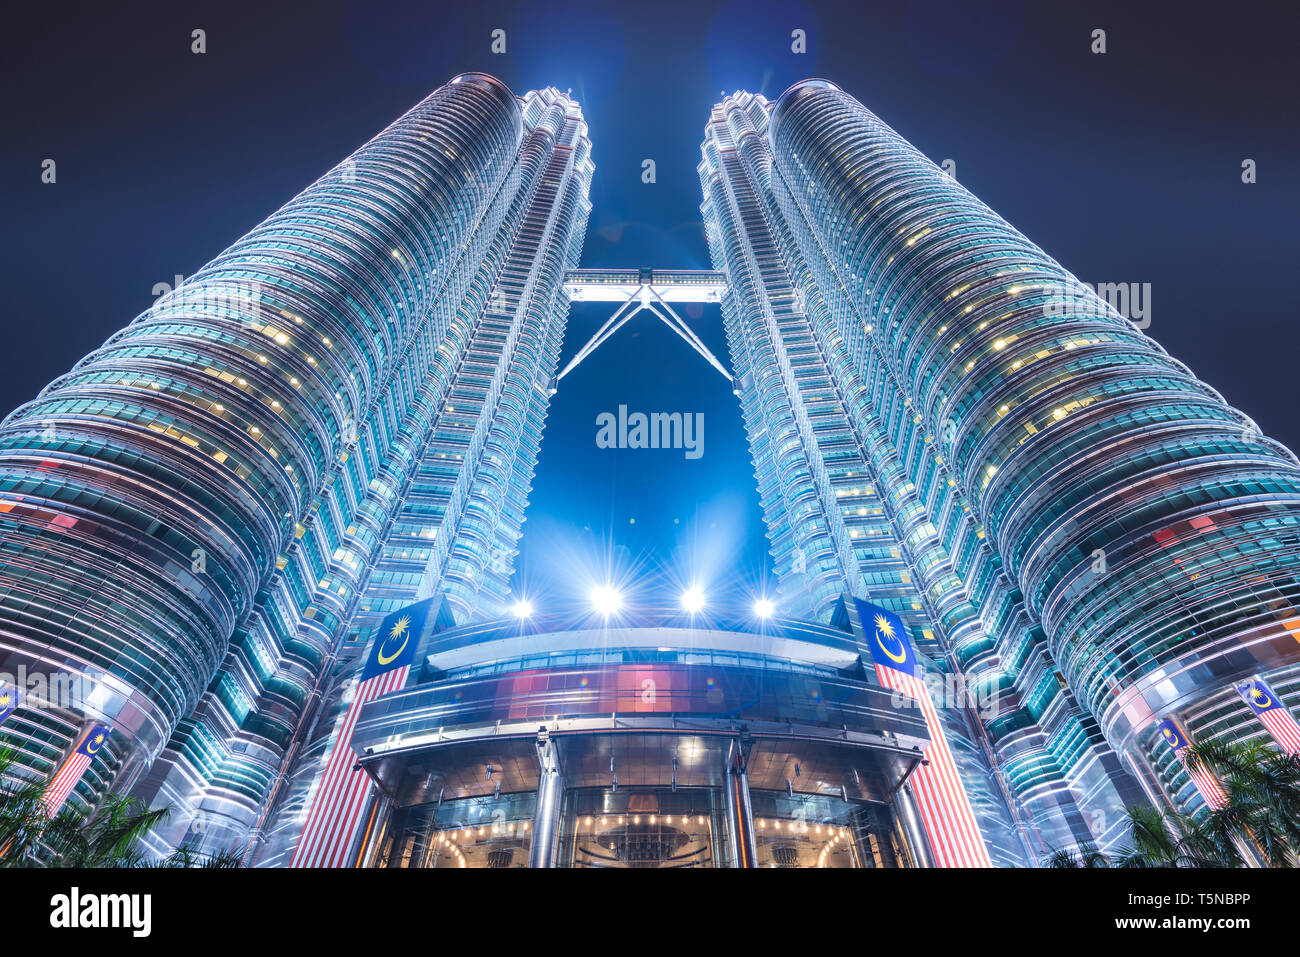 KUALA LUMPUR - SEPTEMBER 16, 2015: The Petronas Towers viewed from below at night. Stock Photo